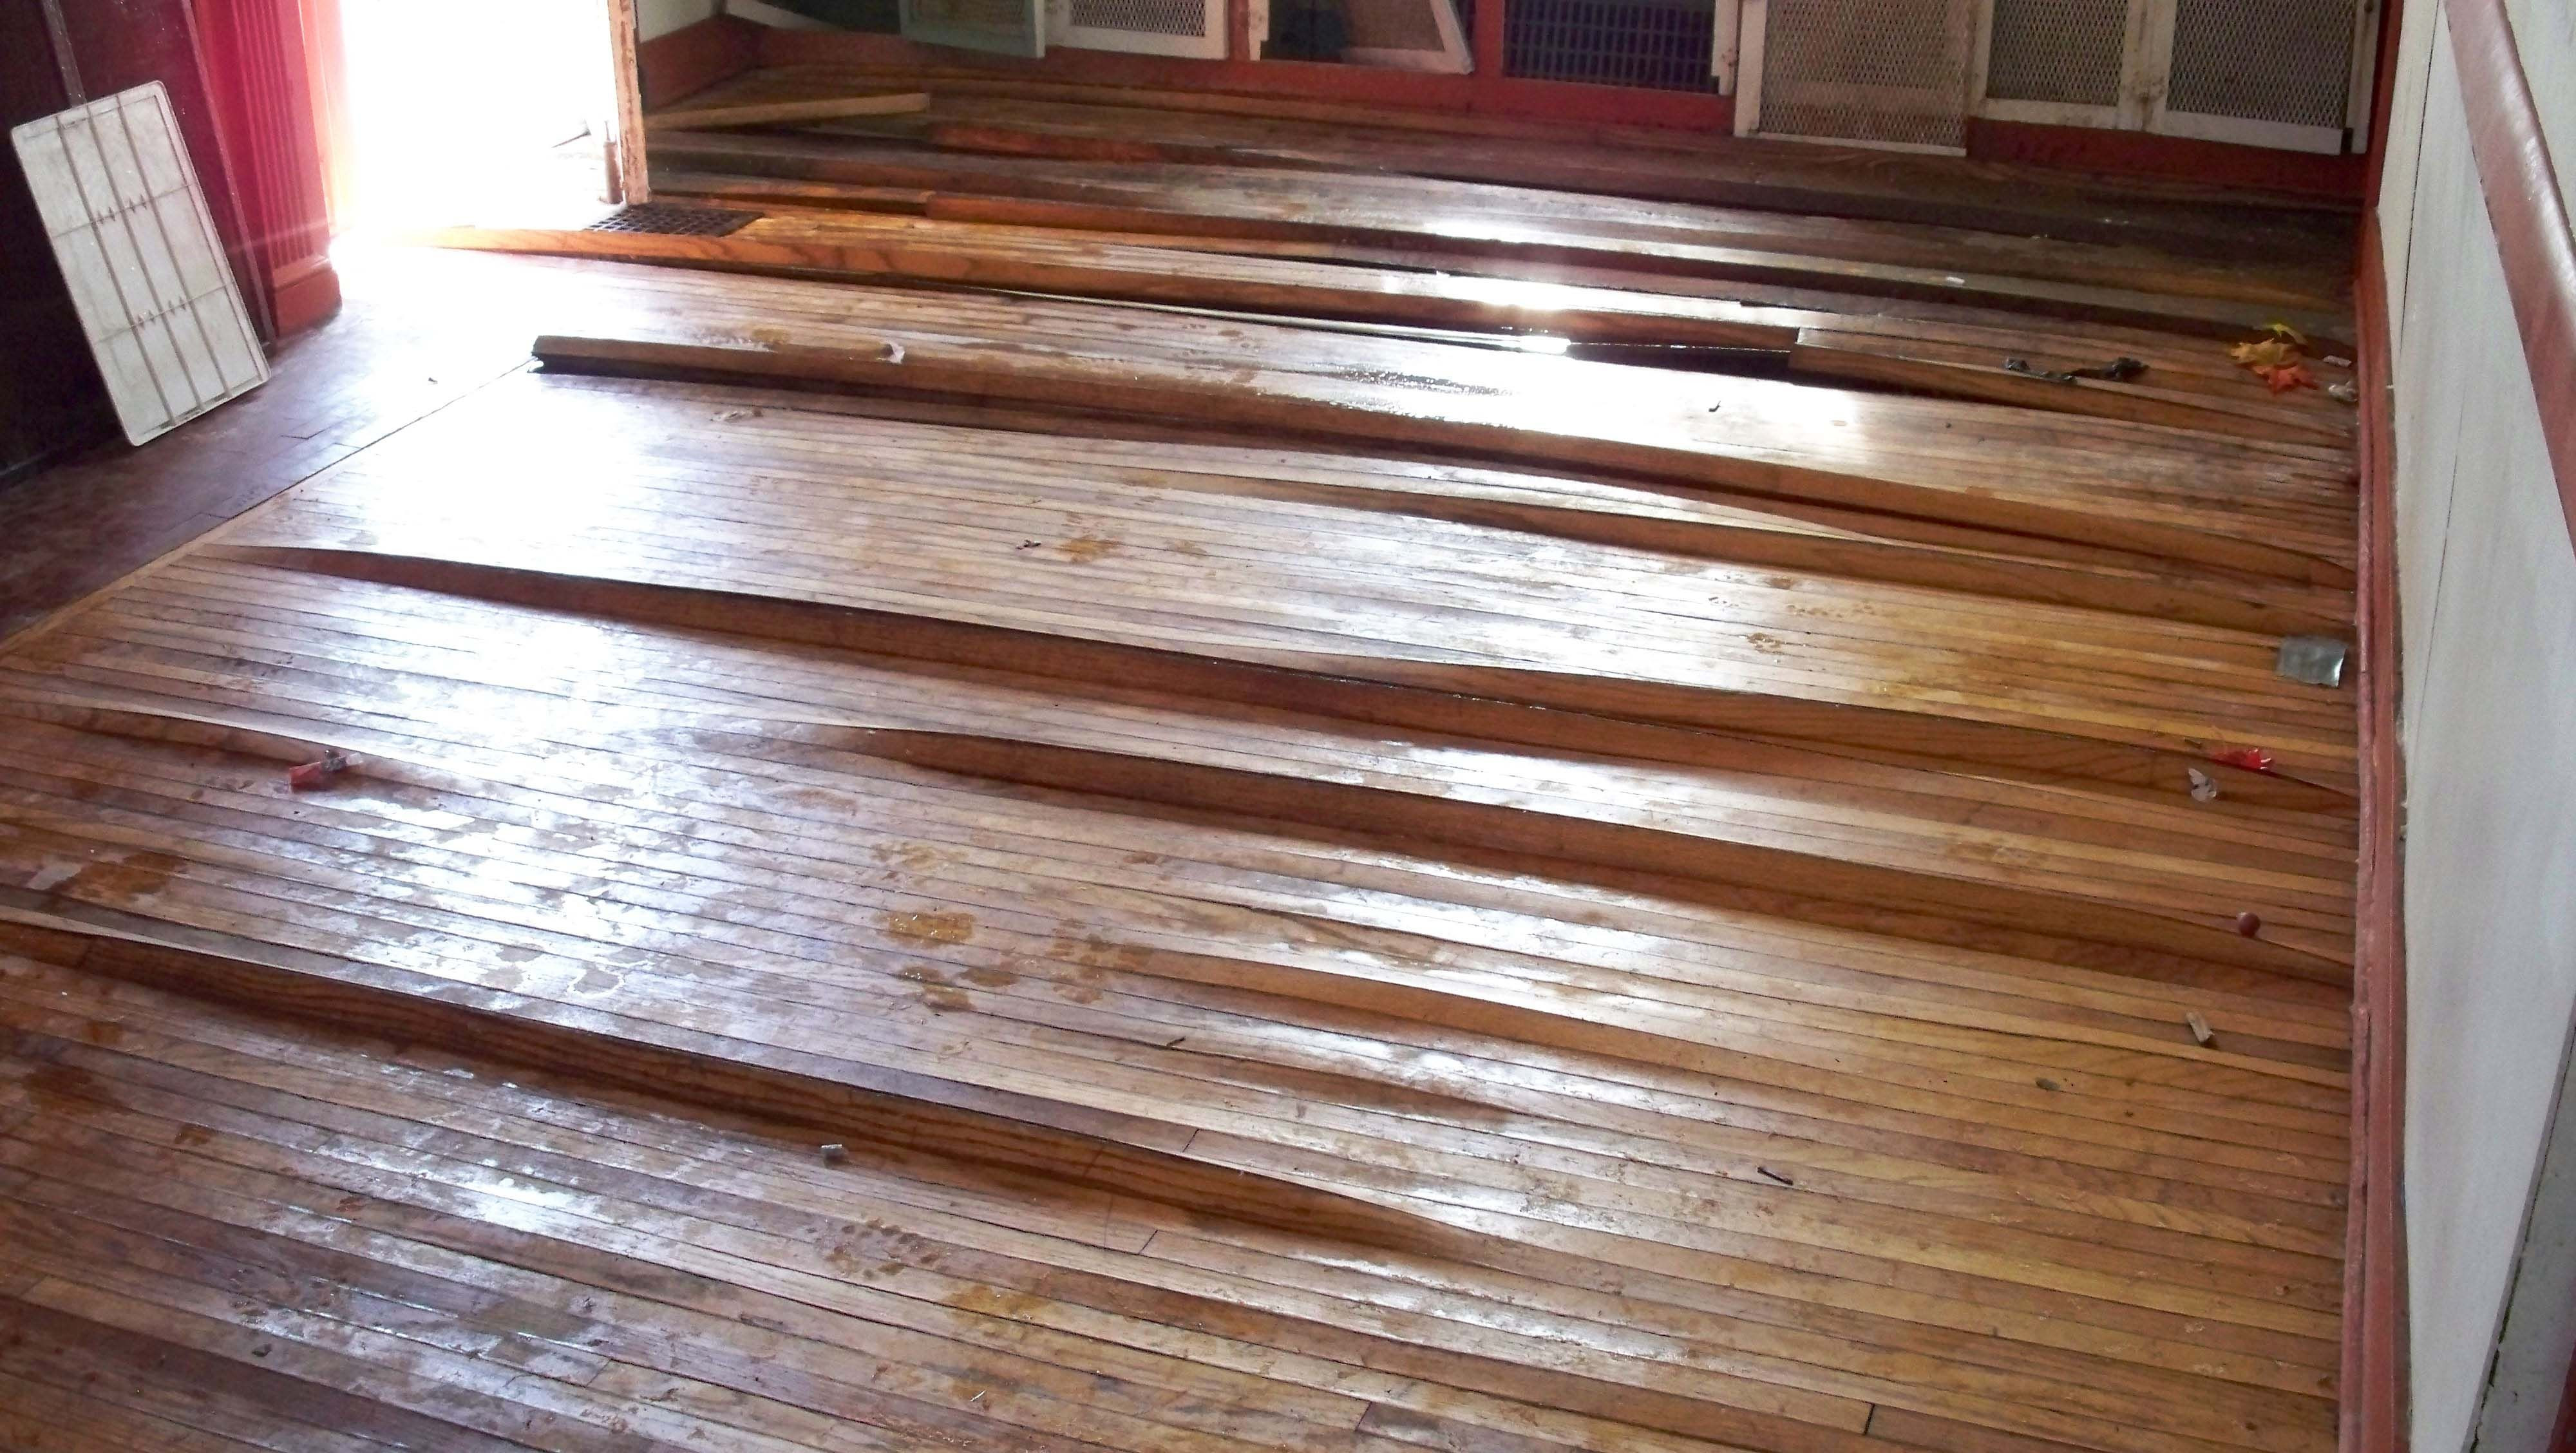 6 Hardwood Flooring Of Hardwood Floor Water Damage Warping Hardwood Floors Pinterest In Hardwood Floor Water Damage Warping